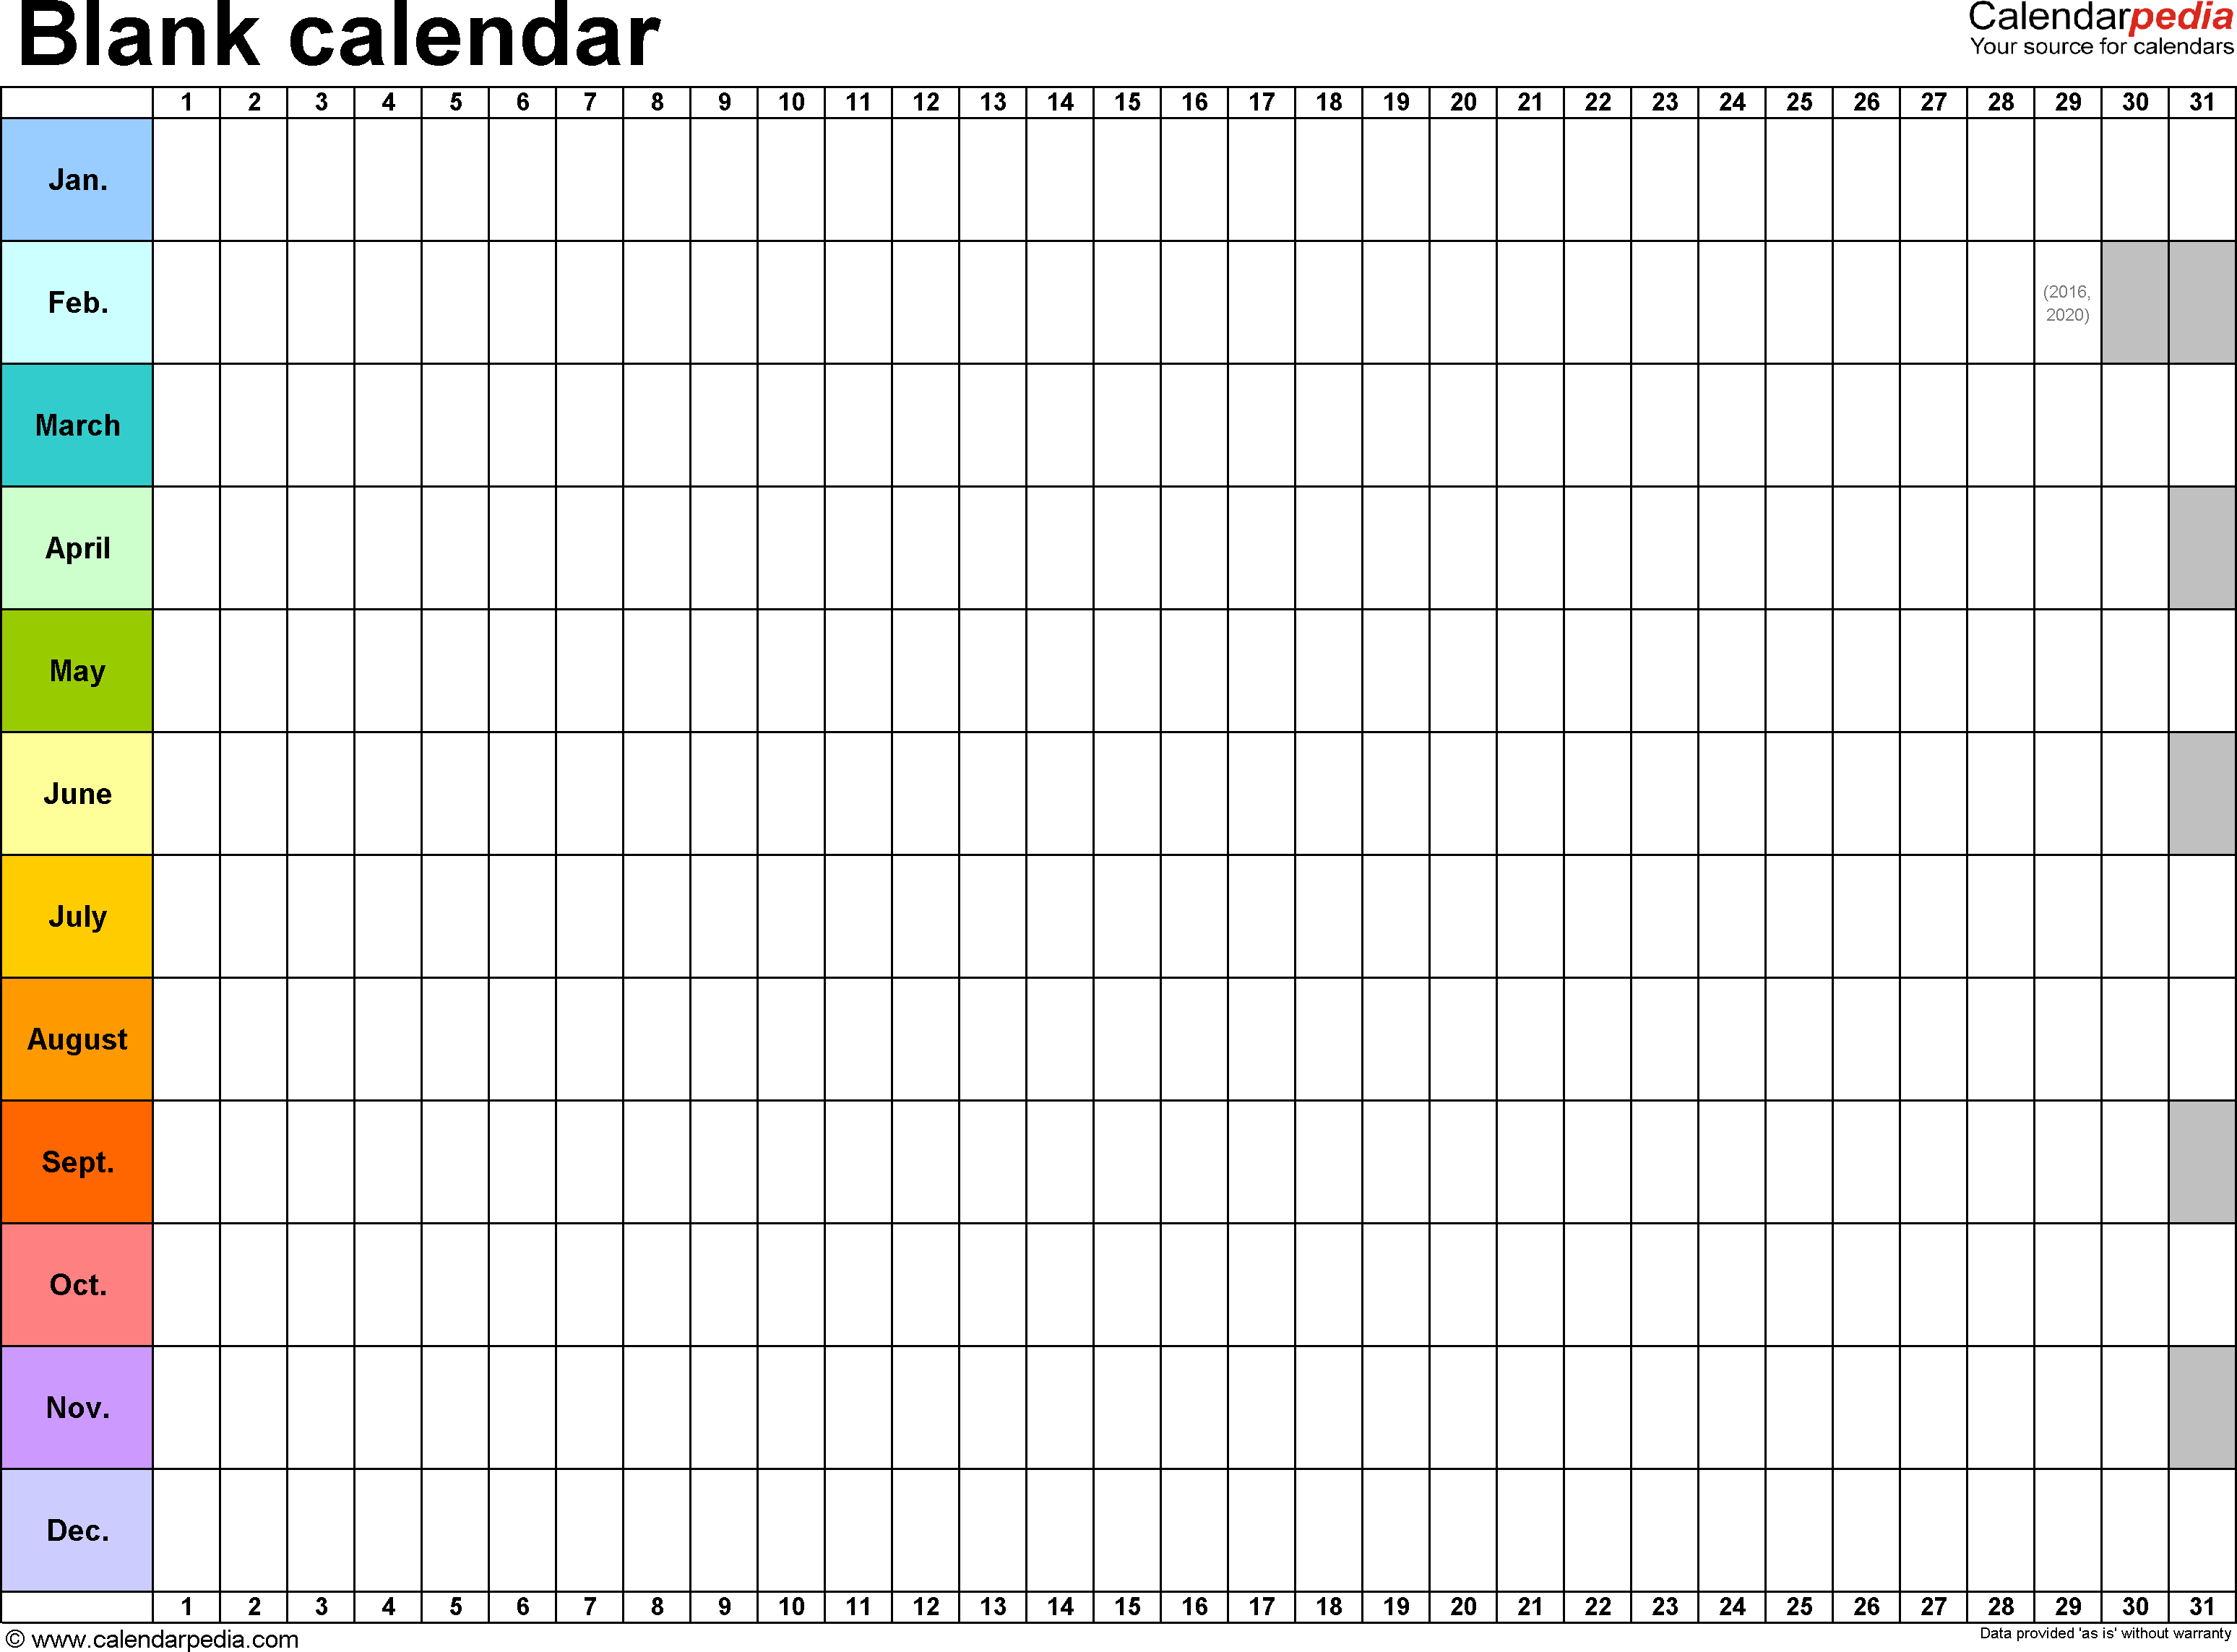 Blank calendar grids